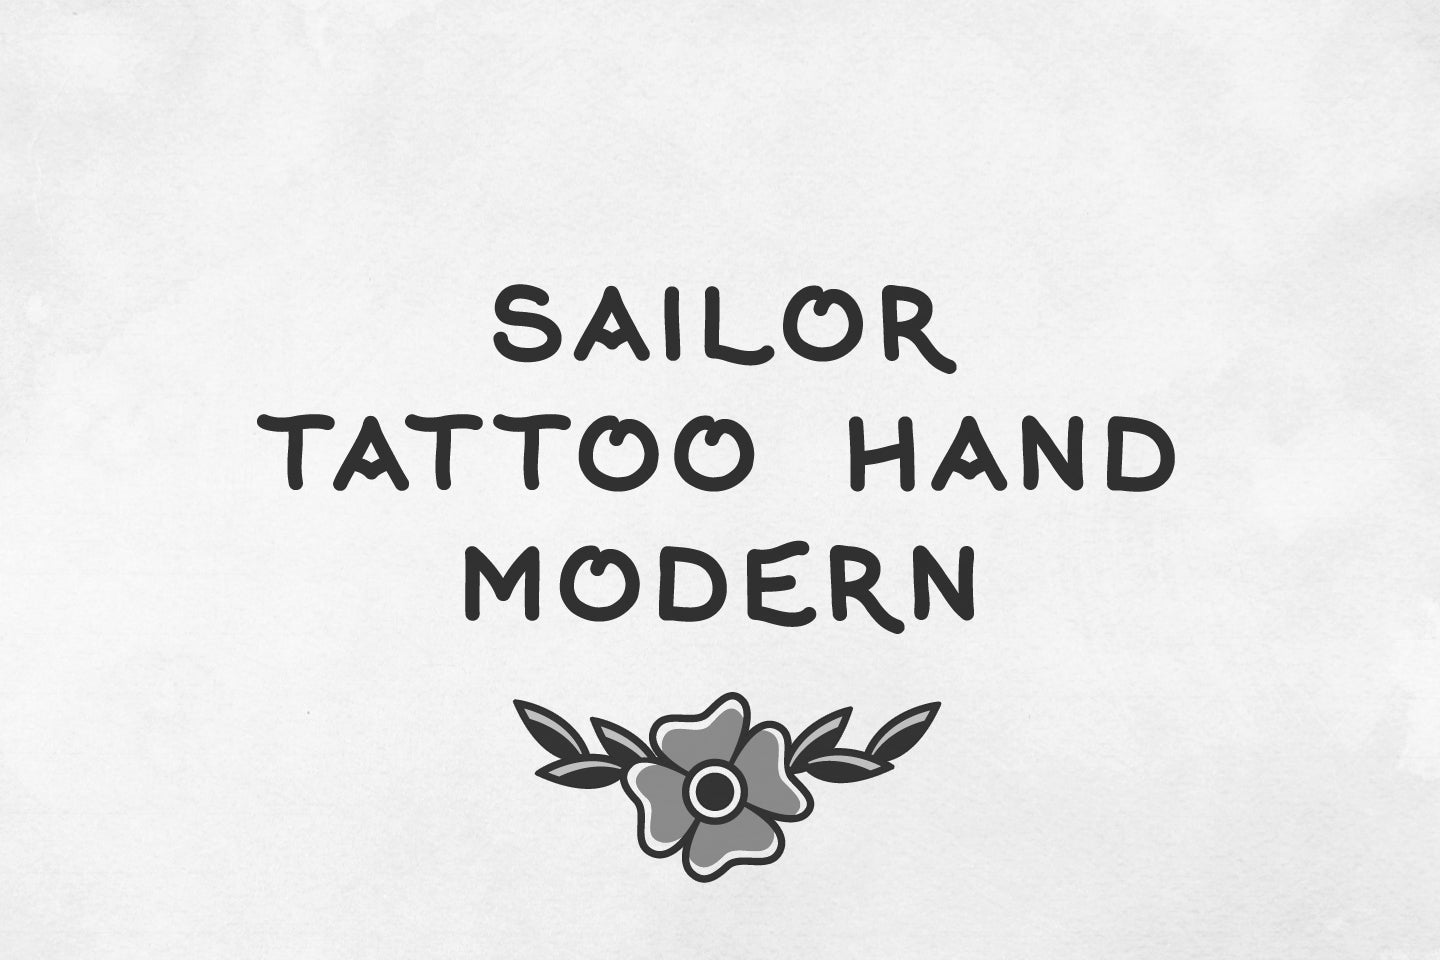 Sailor Tattoo Hand Modern Released